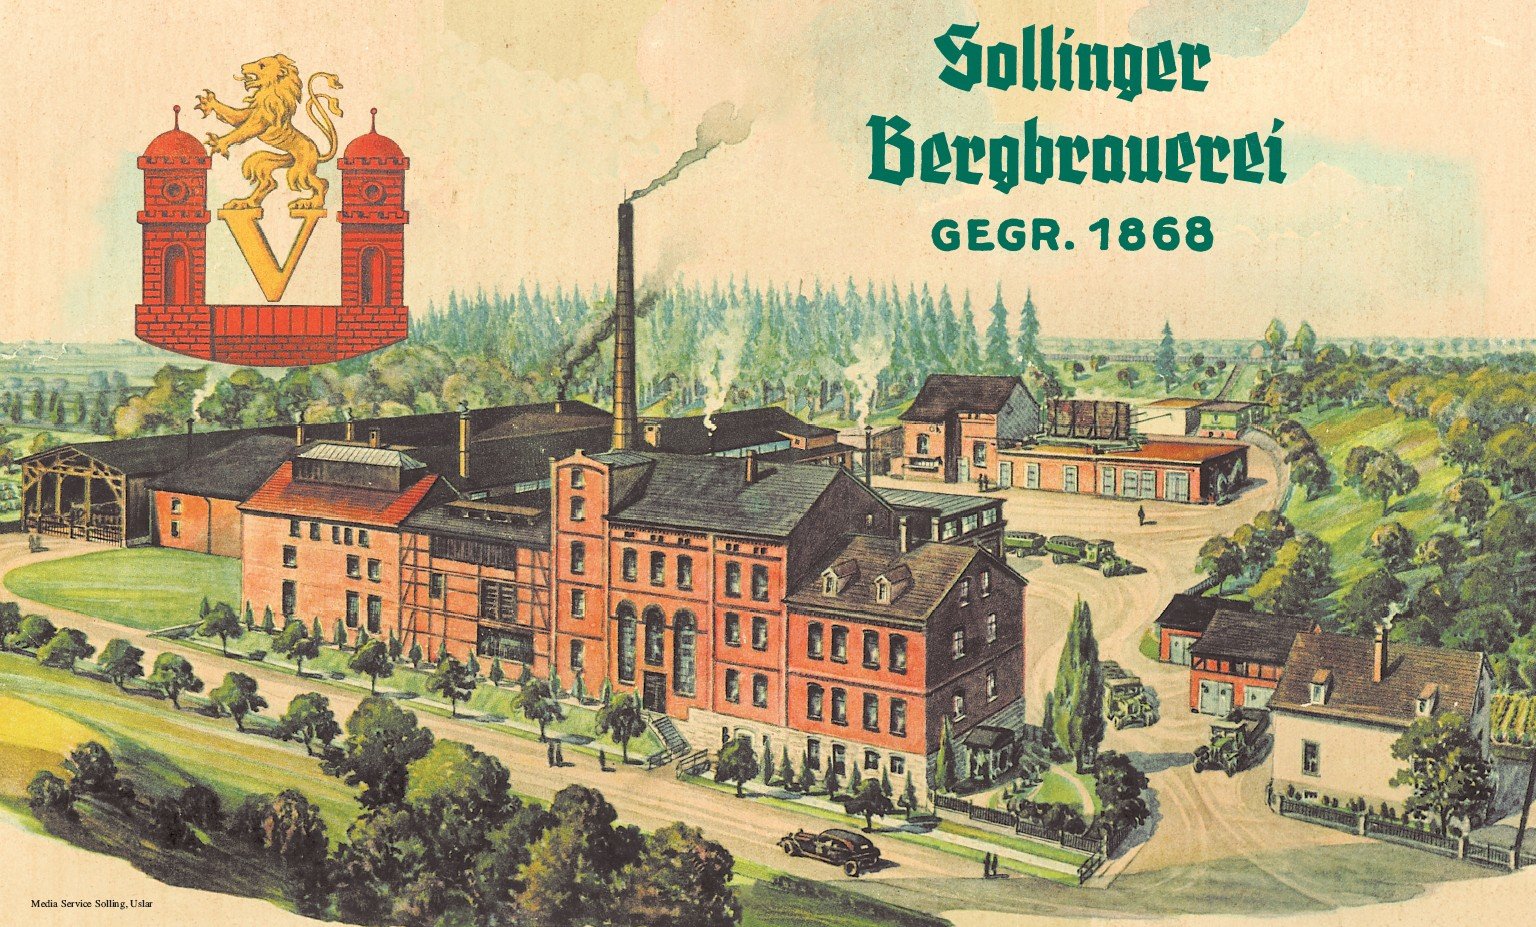 Privatbrauerei Bergbräu brewery from Germany